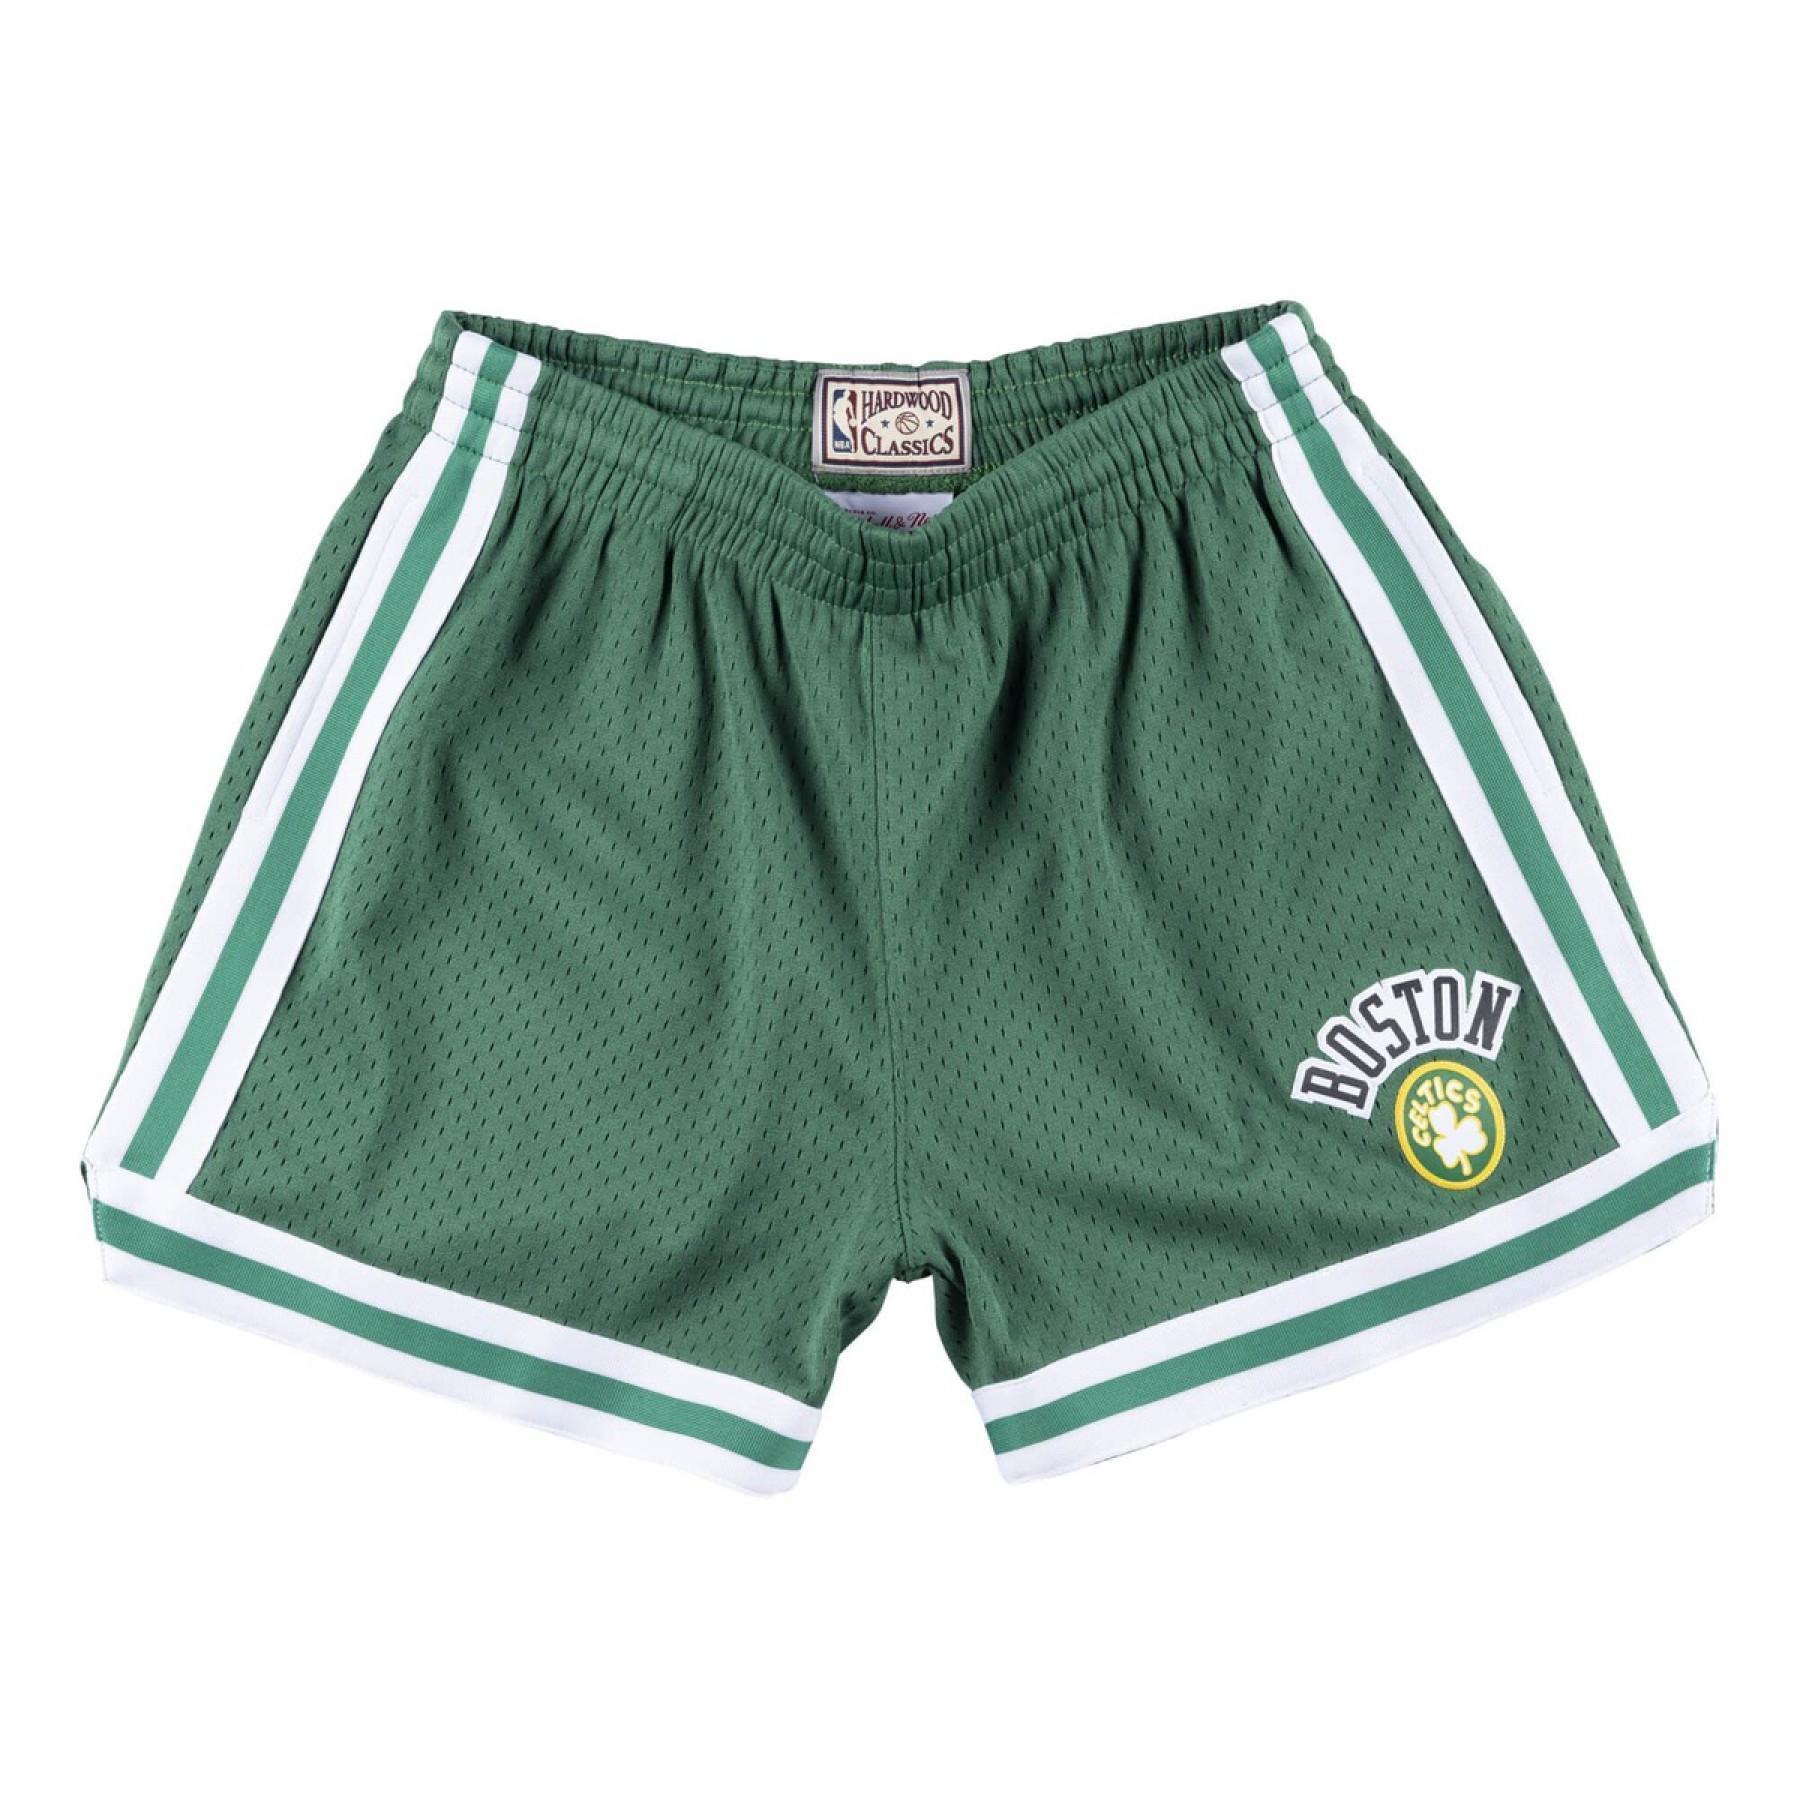 Women's shorts Boston Celtics jump shot